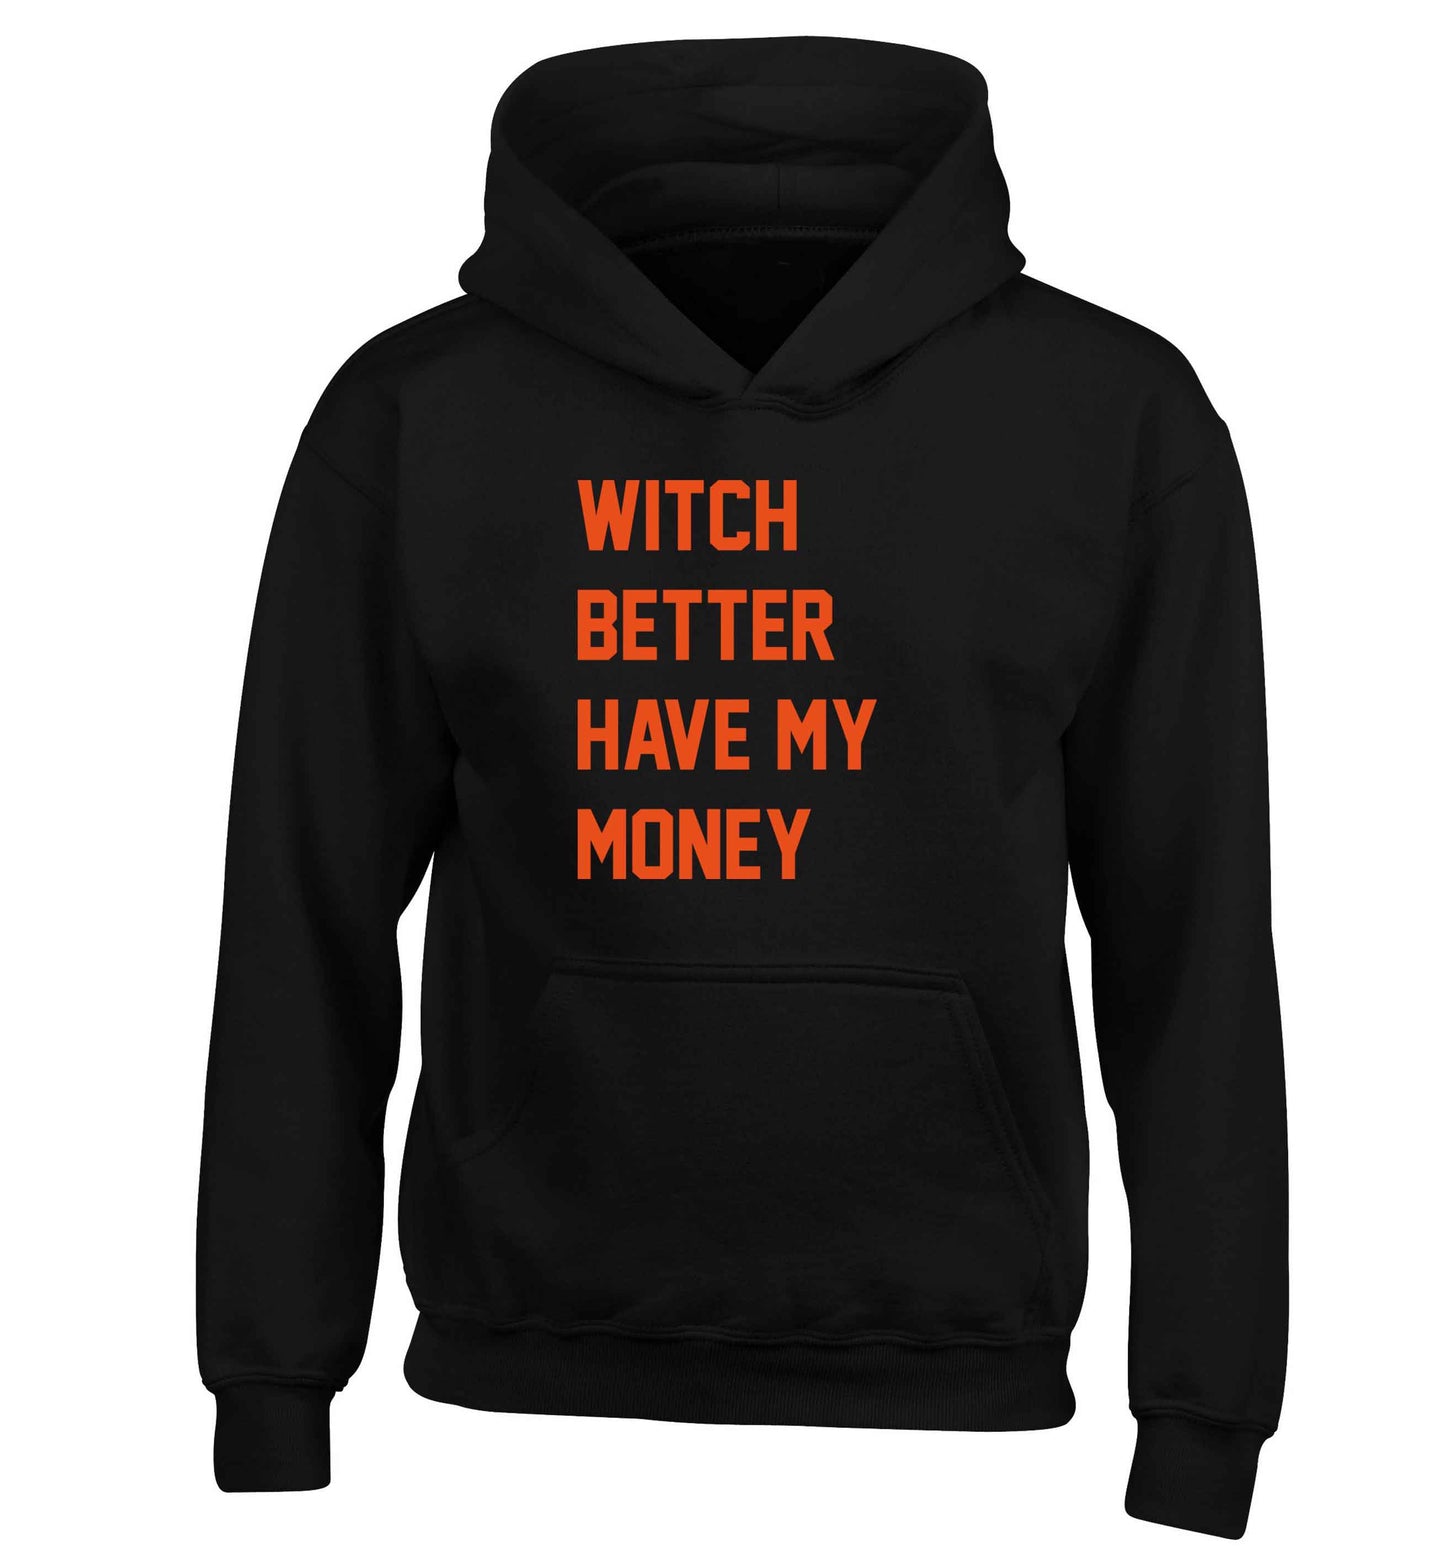 Witch better have my money children's black hoodie 12-13 Years